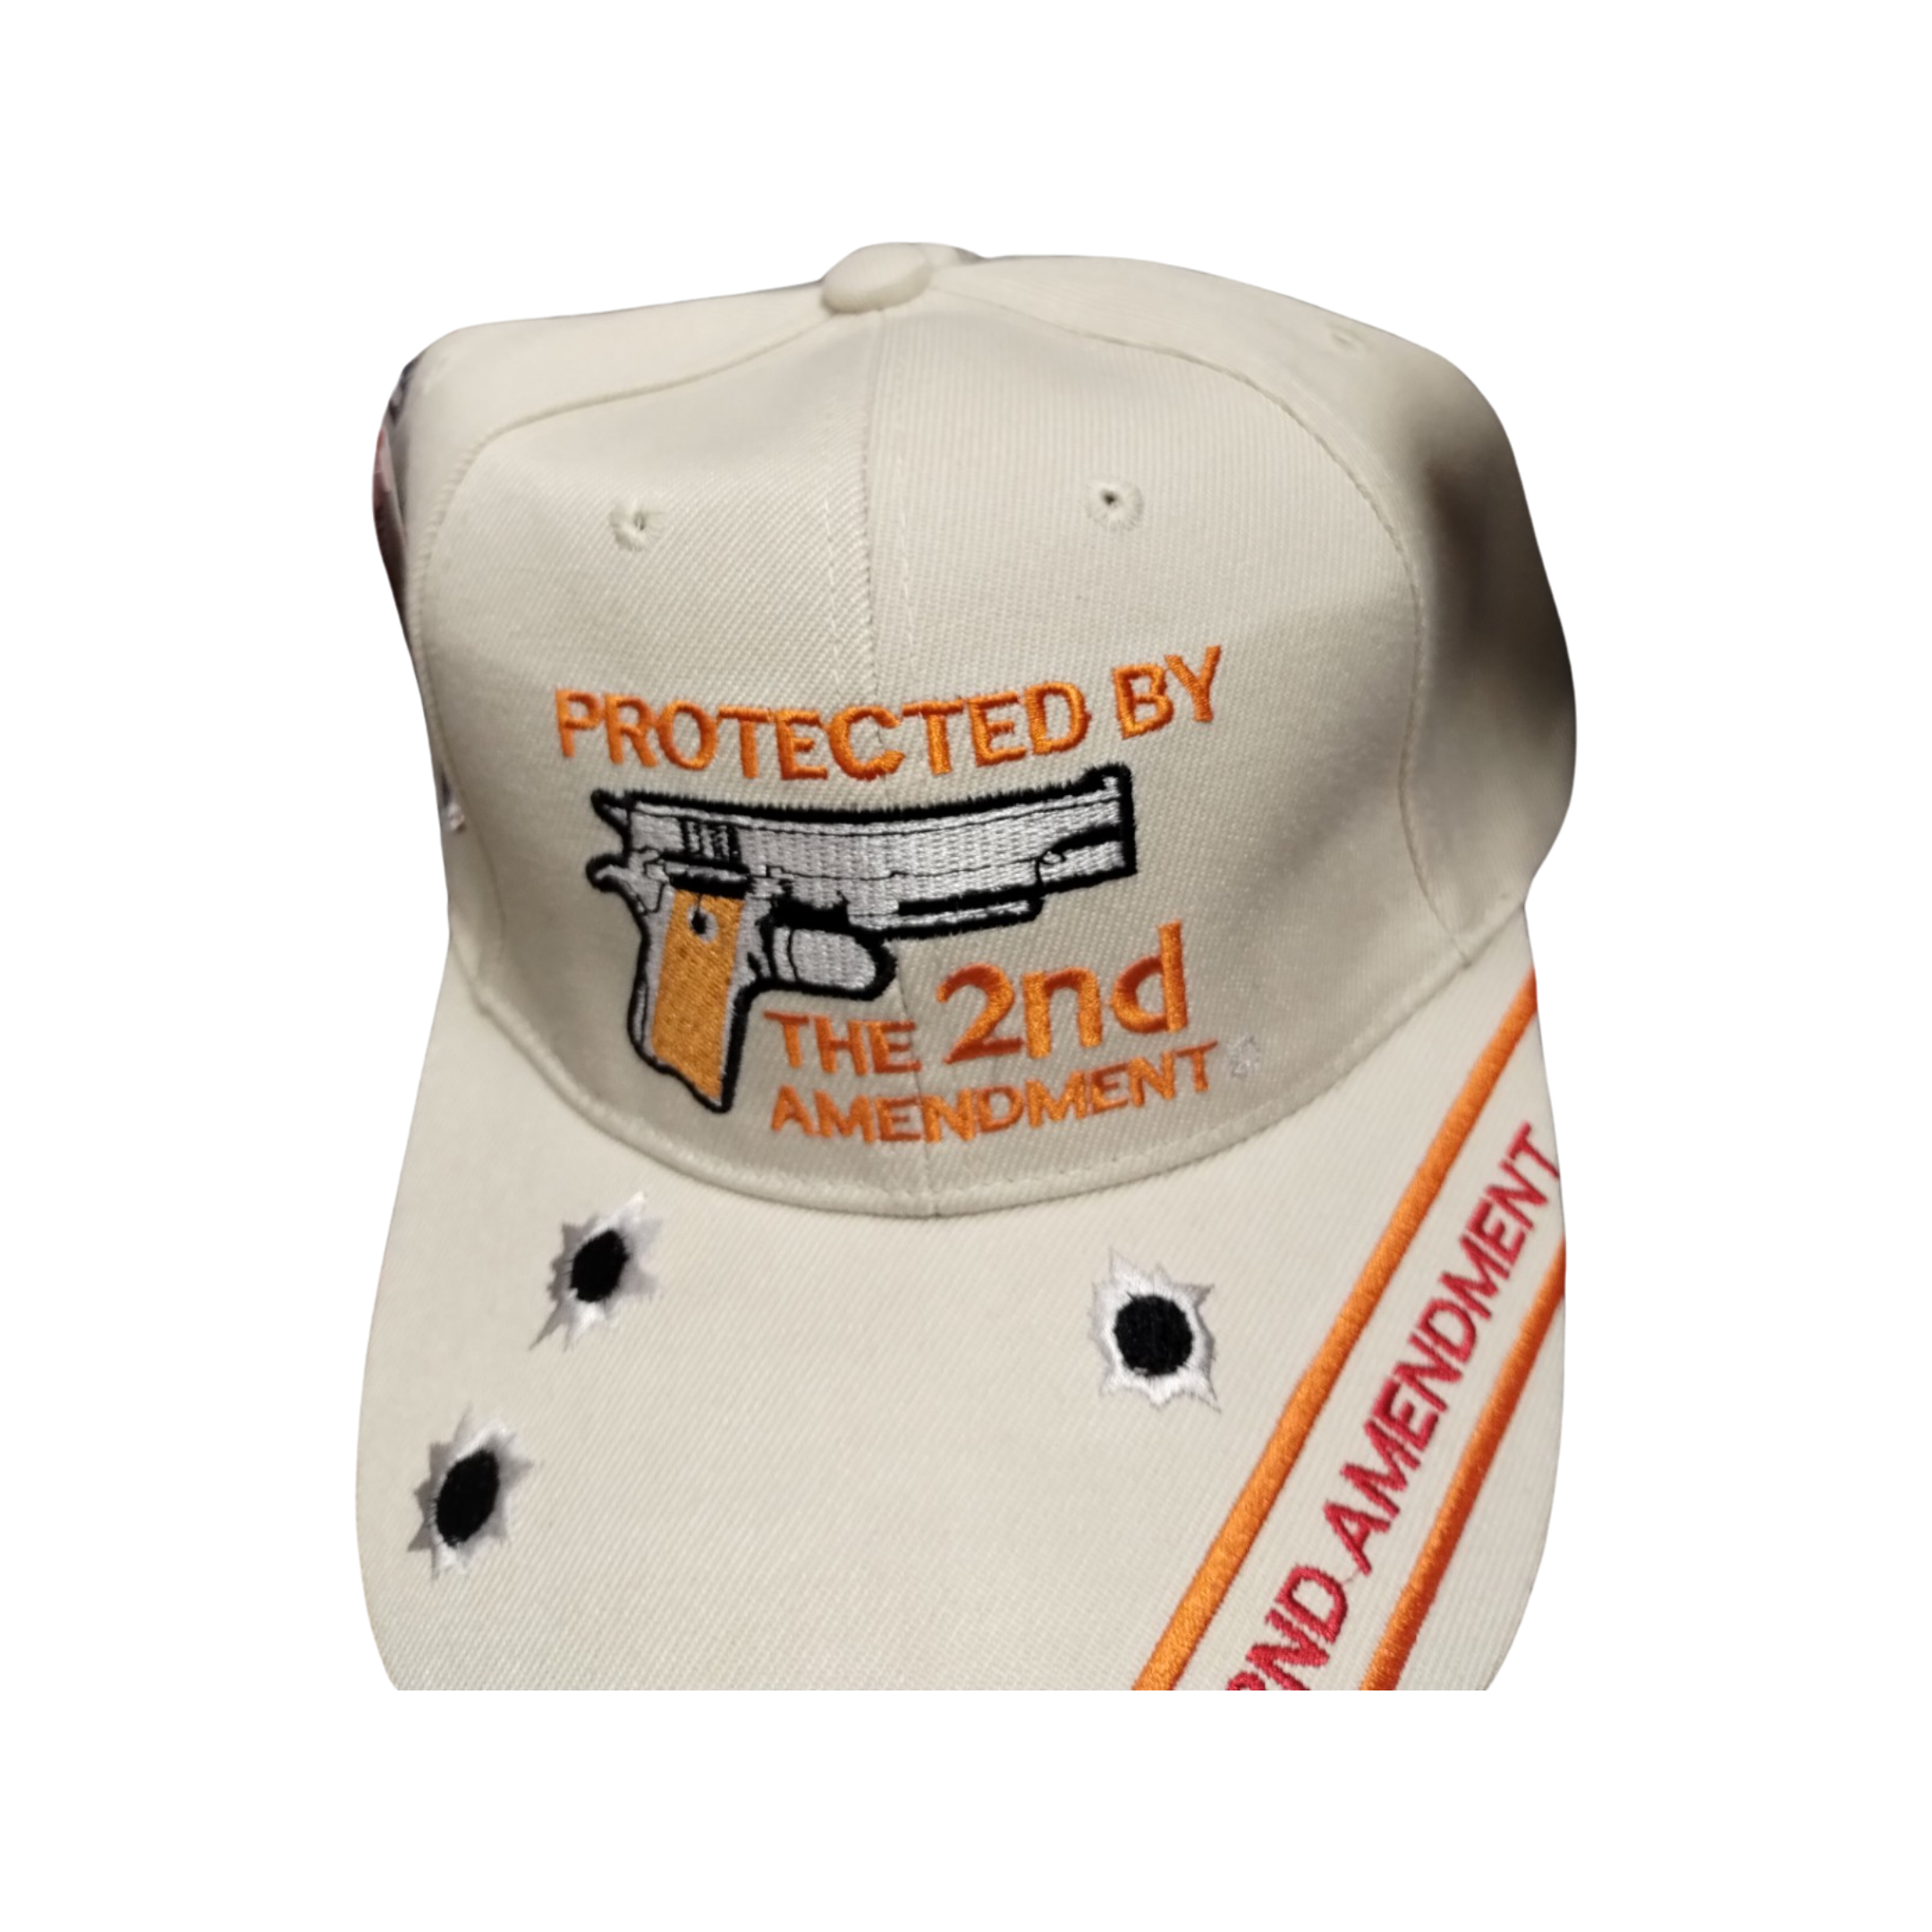 Protected by Second Amendment Baseball CAP - Pro-GUN Rights Headwear